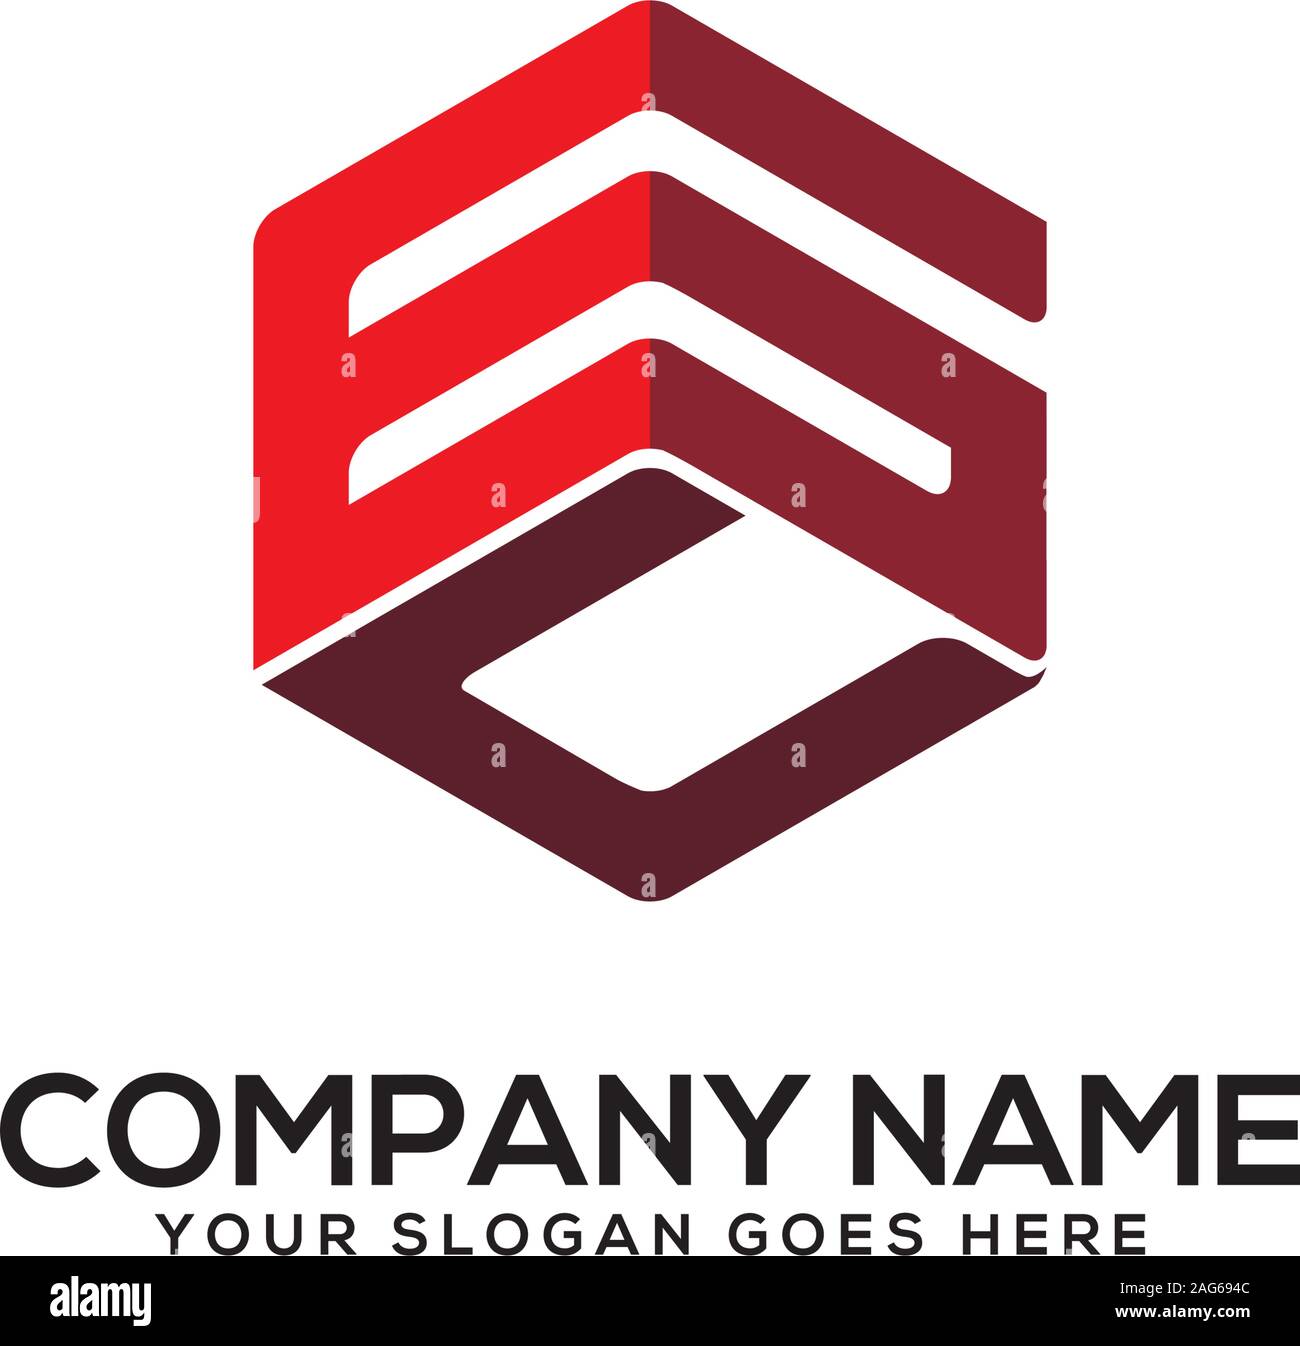 Hexagon Logo with Letter CGC Design Stock Vector - Illustration of